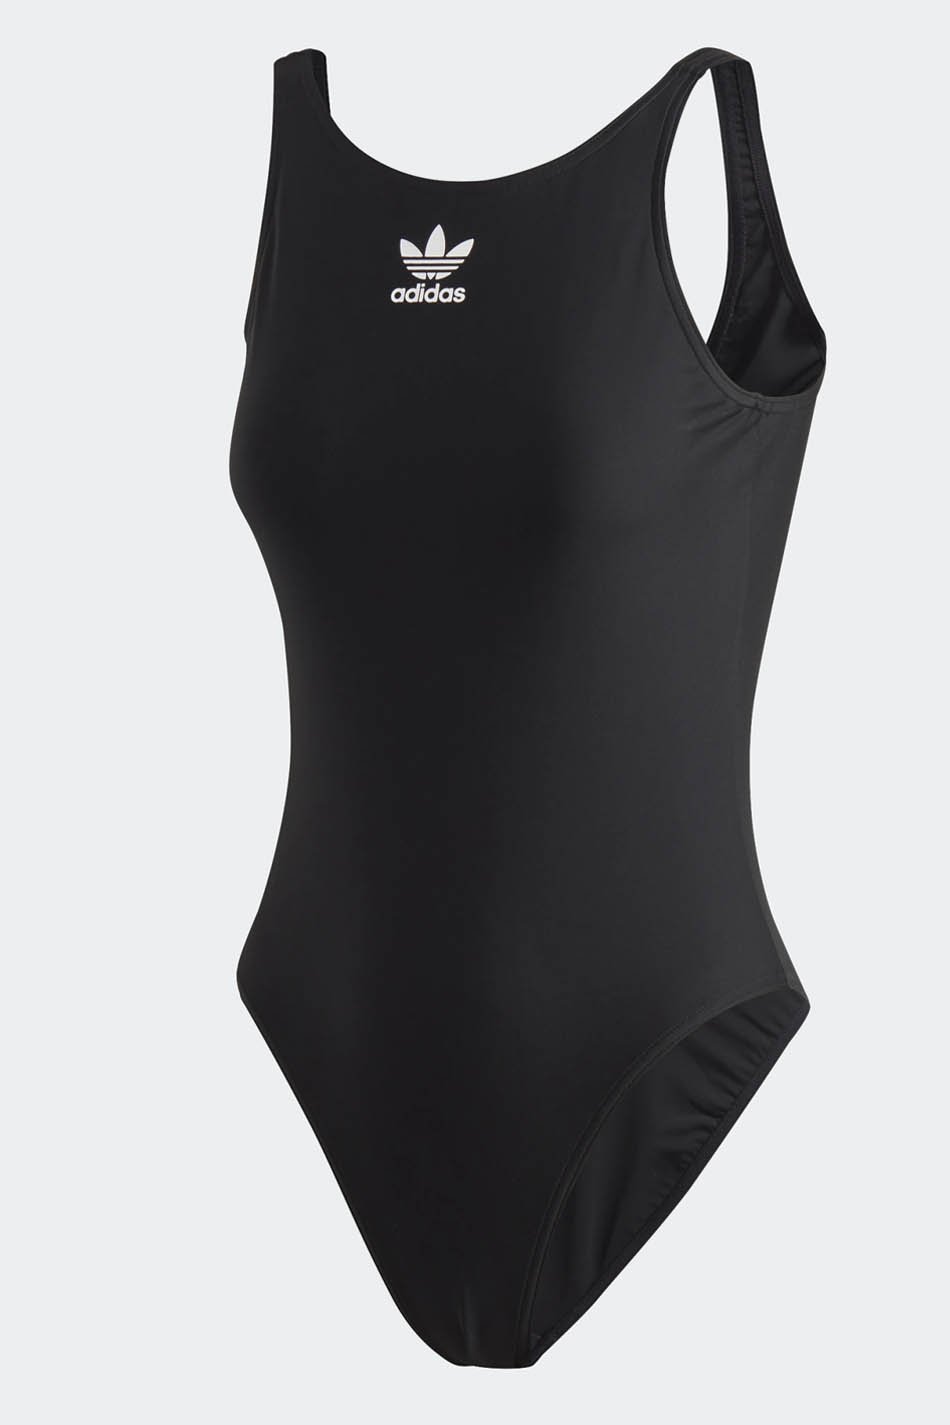 Adidas Trefoil Black Swimsuit